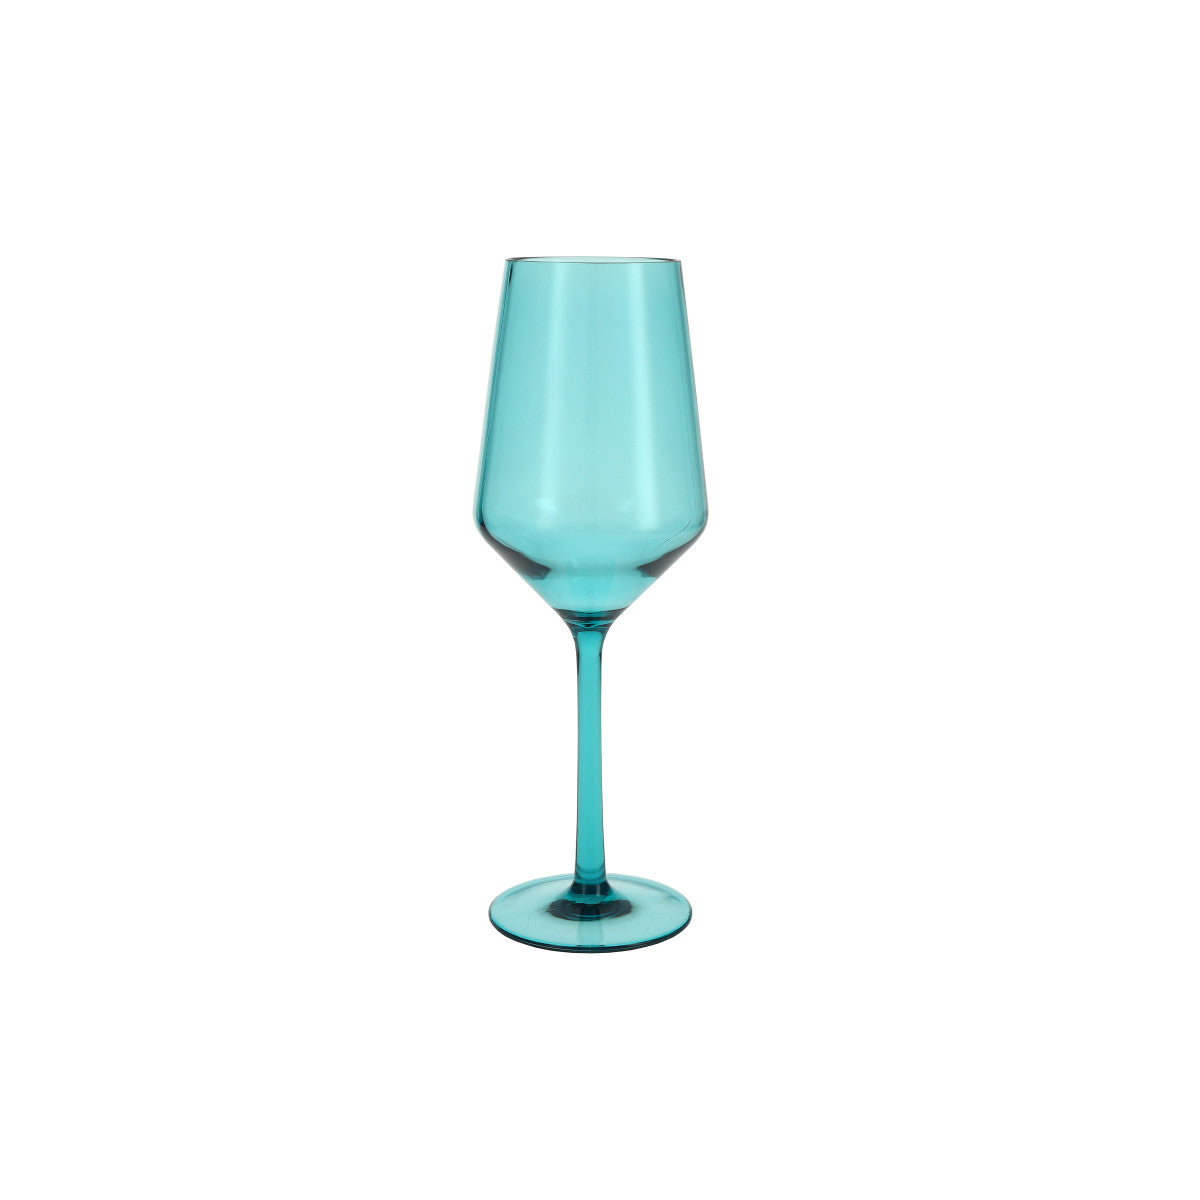 blue wine glass on white background.